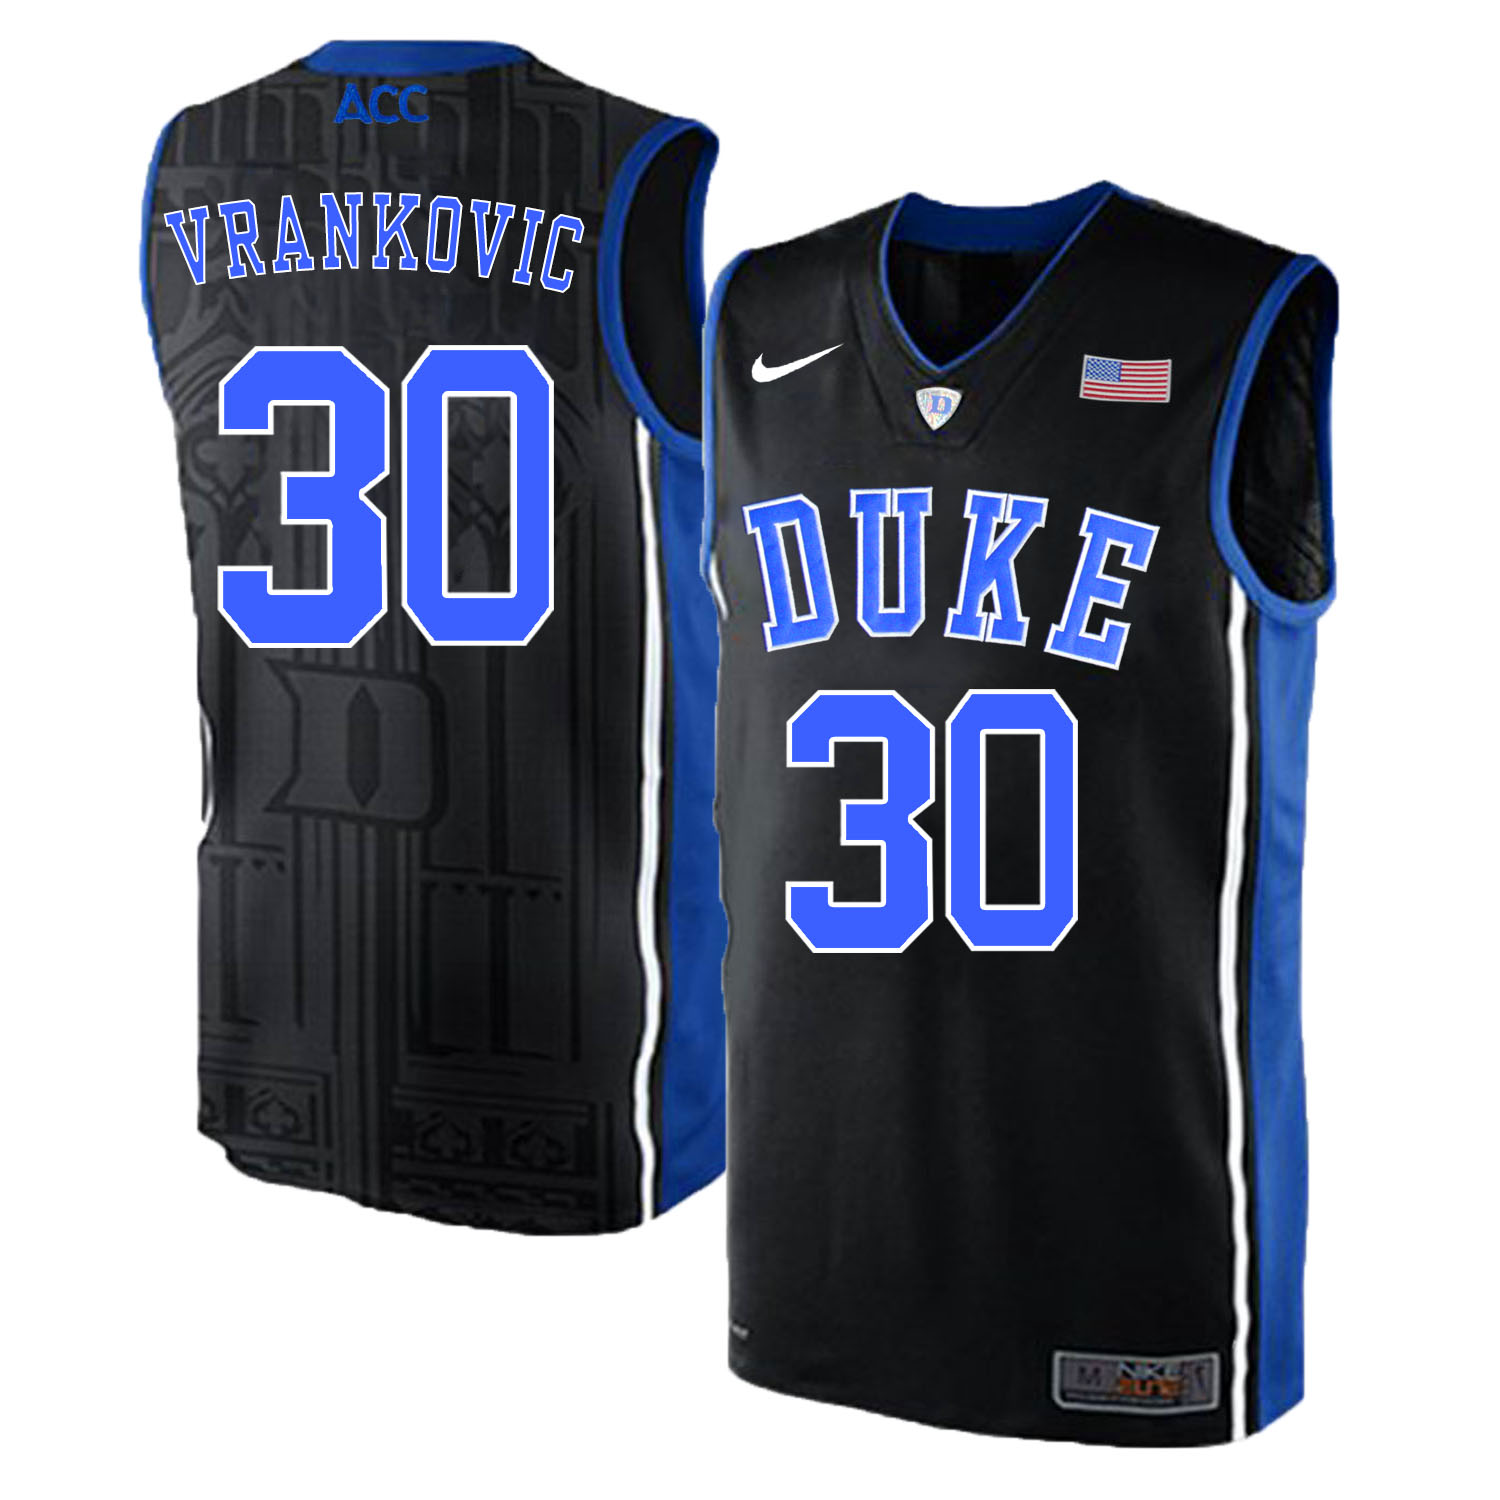 Duke Blue Devils 30 Antonio Vrankovic Black Elite Nike College Basketball Jersey